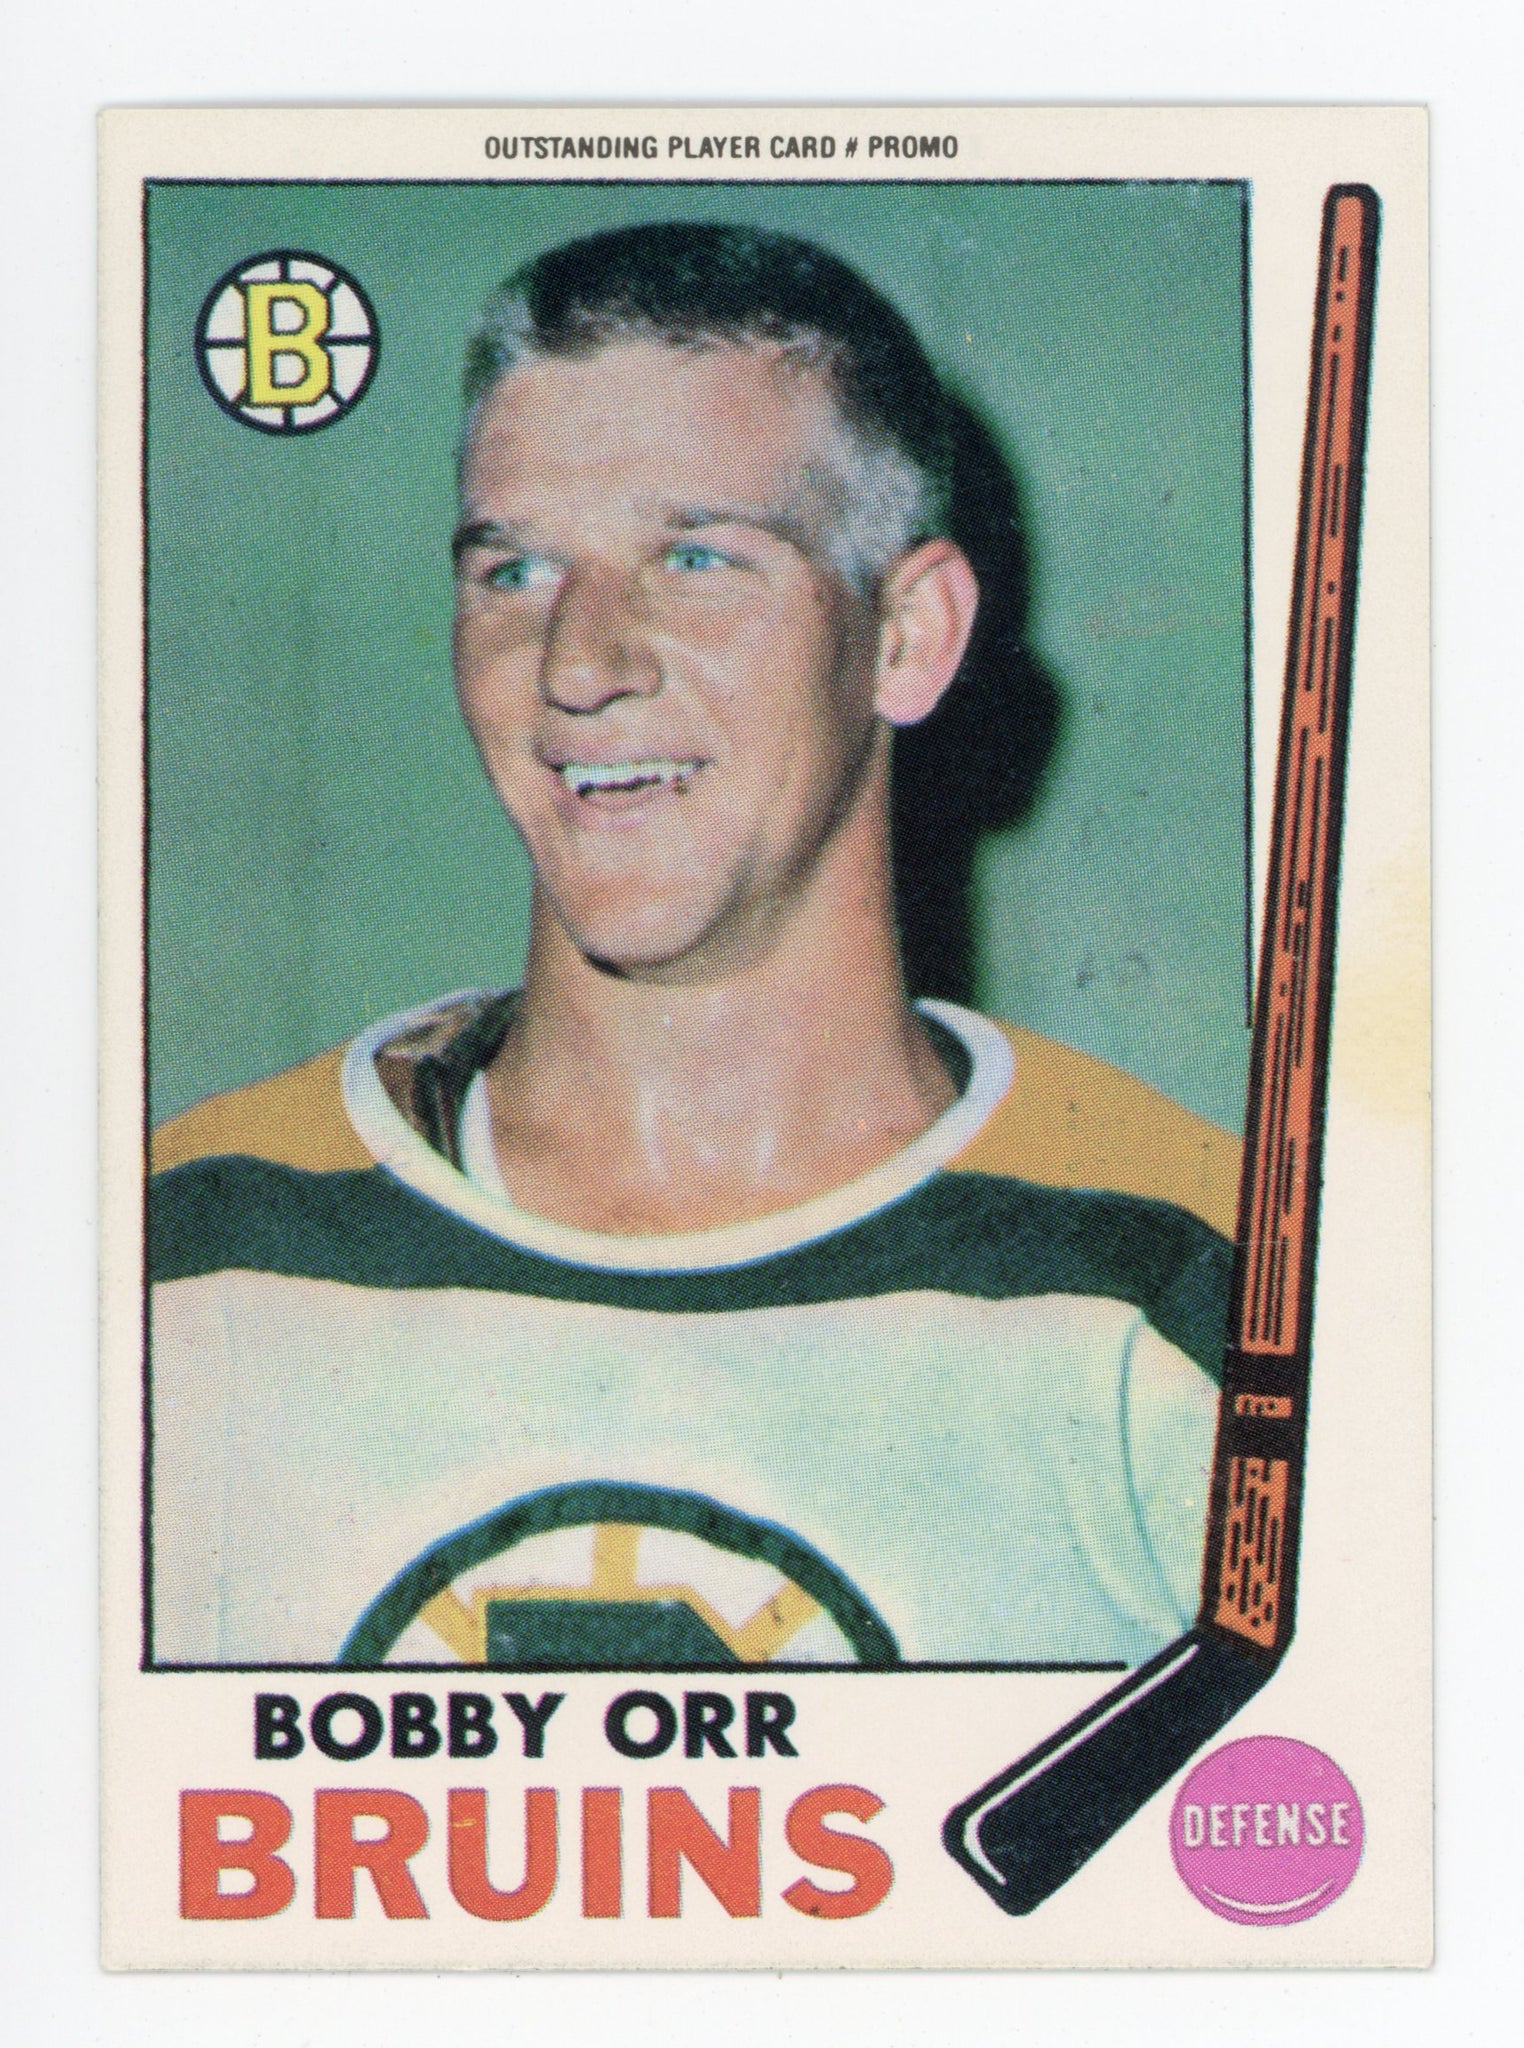 1991 Bobby Orr Outstanding Player Card Promo Boston Bruins # 24